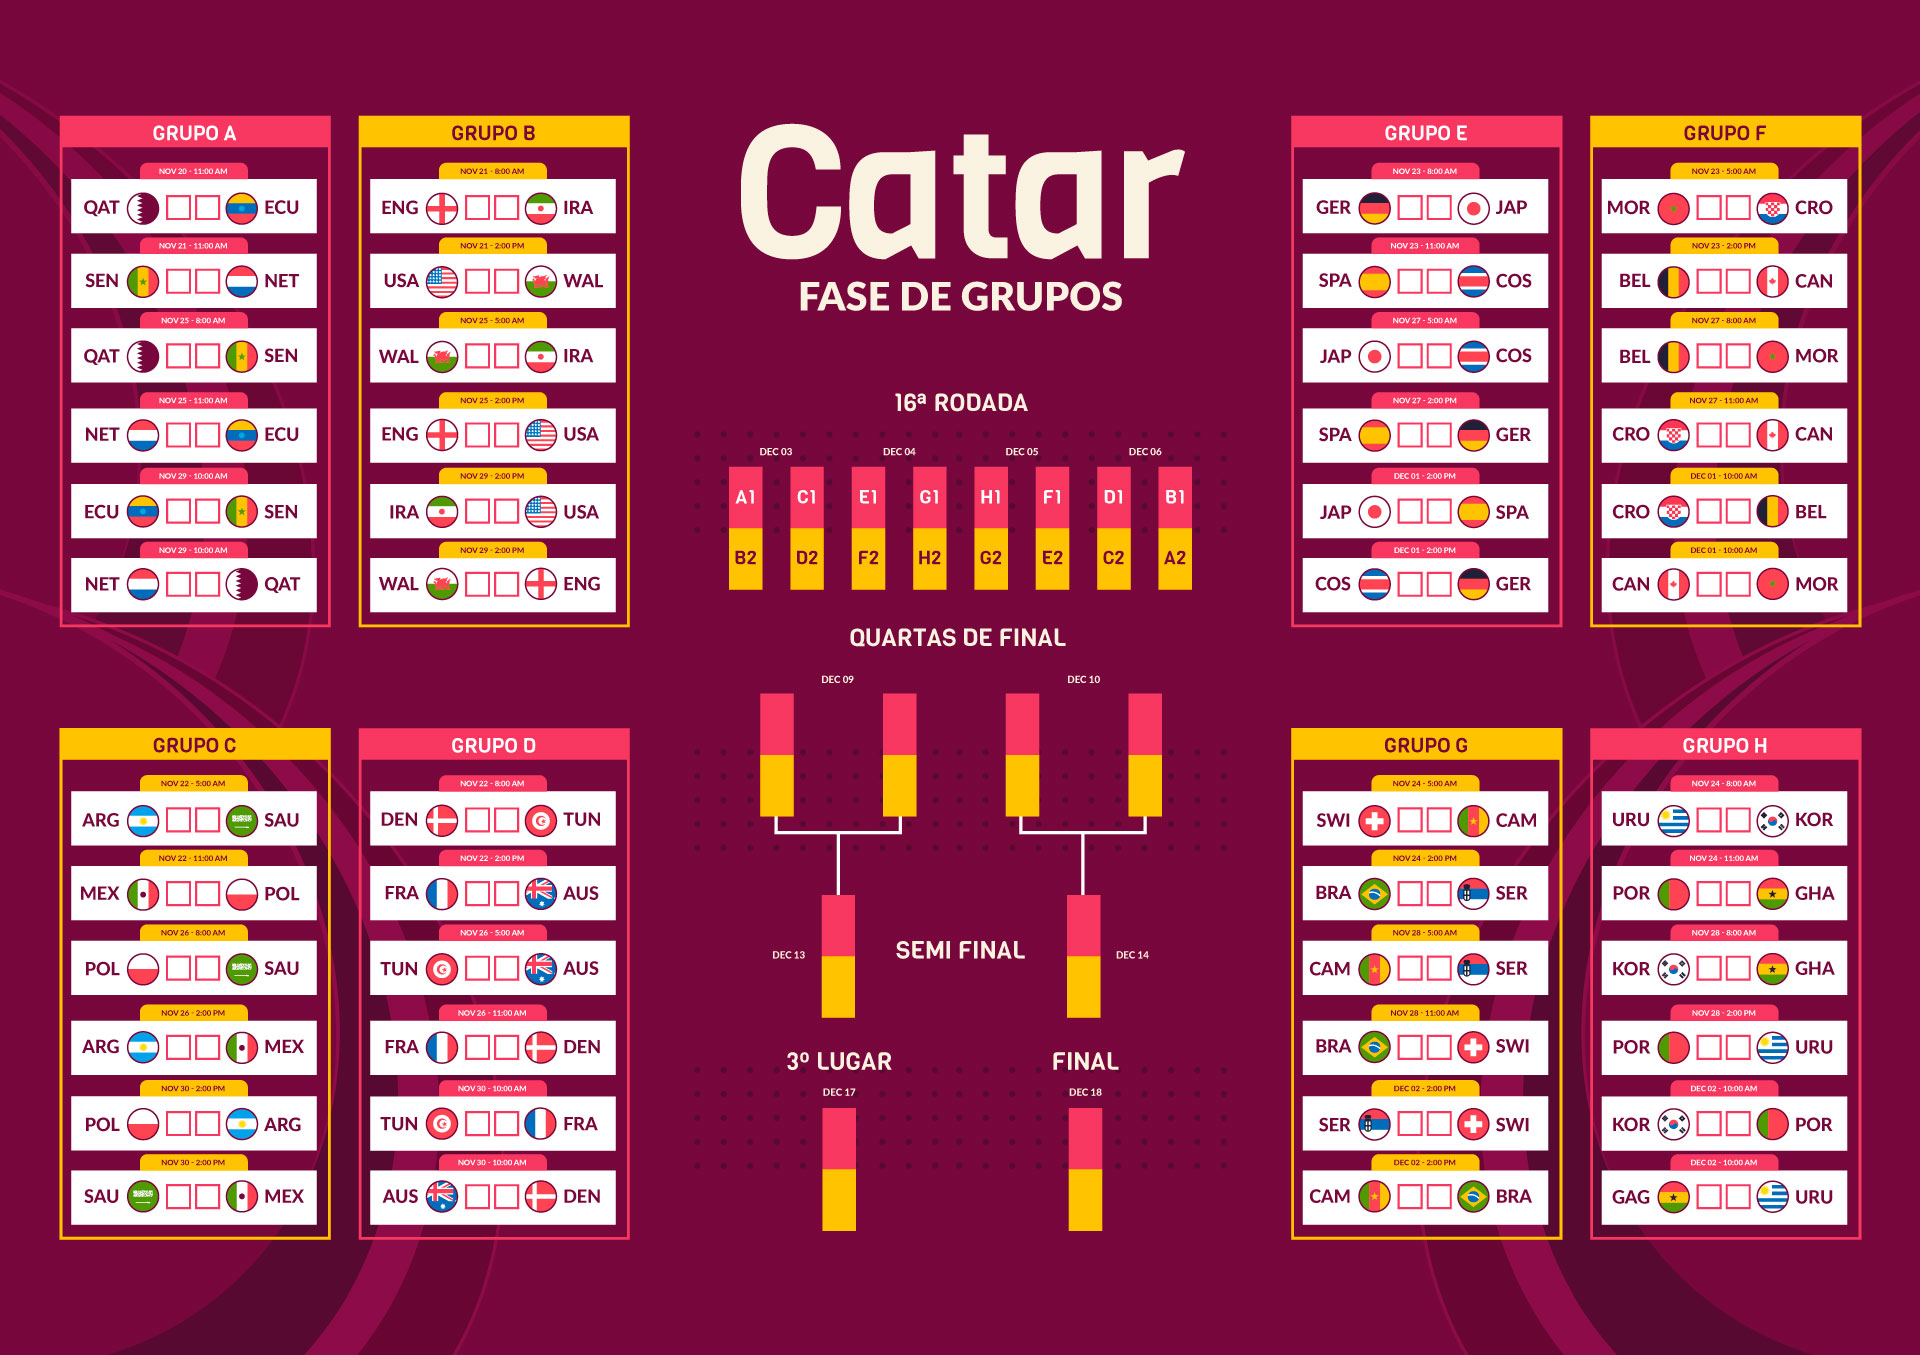 Tabela da Copa 2022